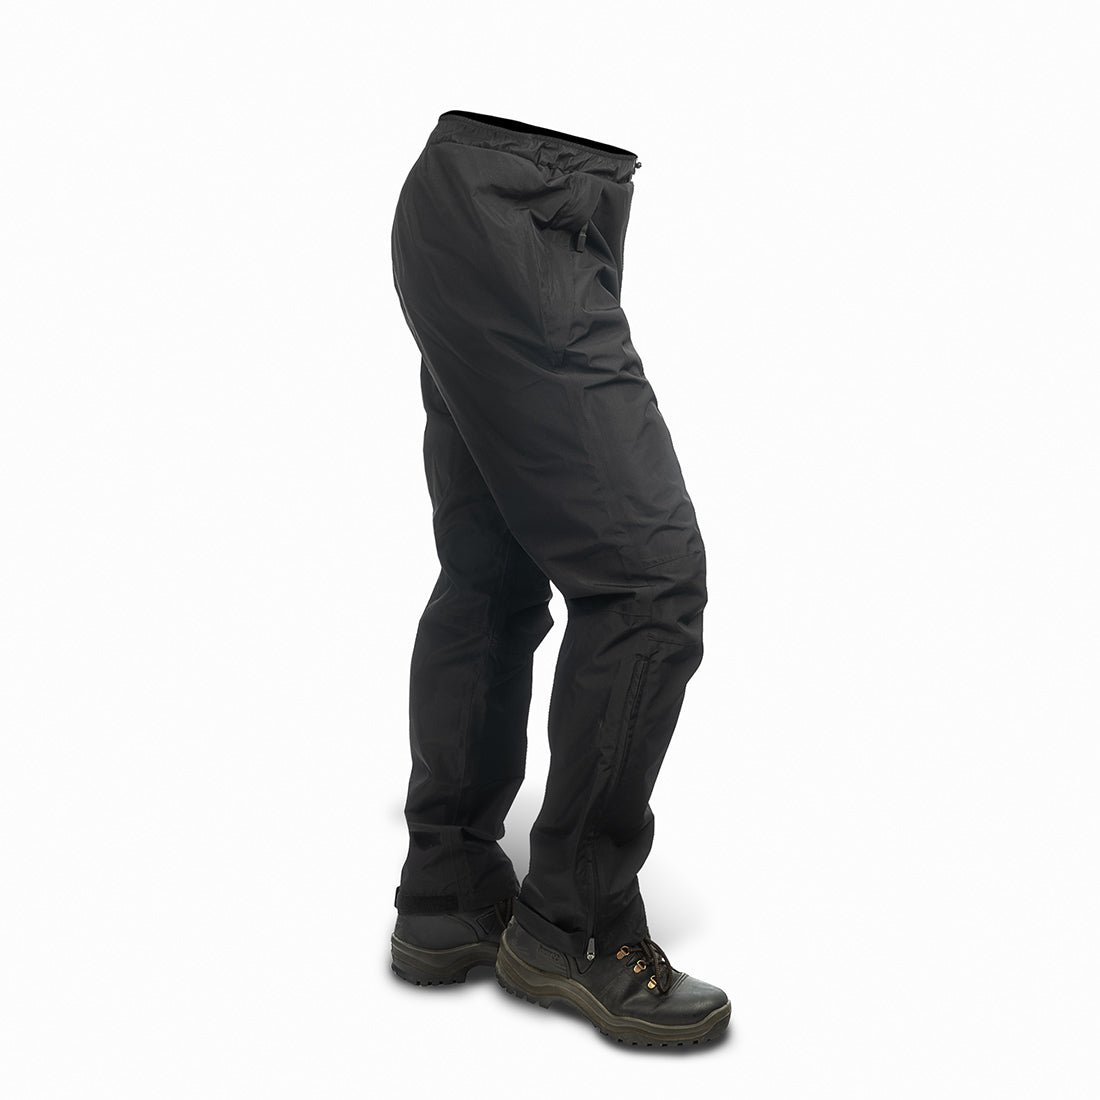 HUK Men's Gunwale Water Proof & Wind Resistant Rain Pant, Black